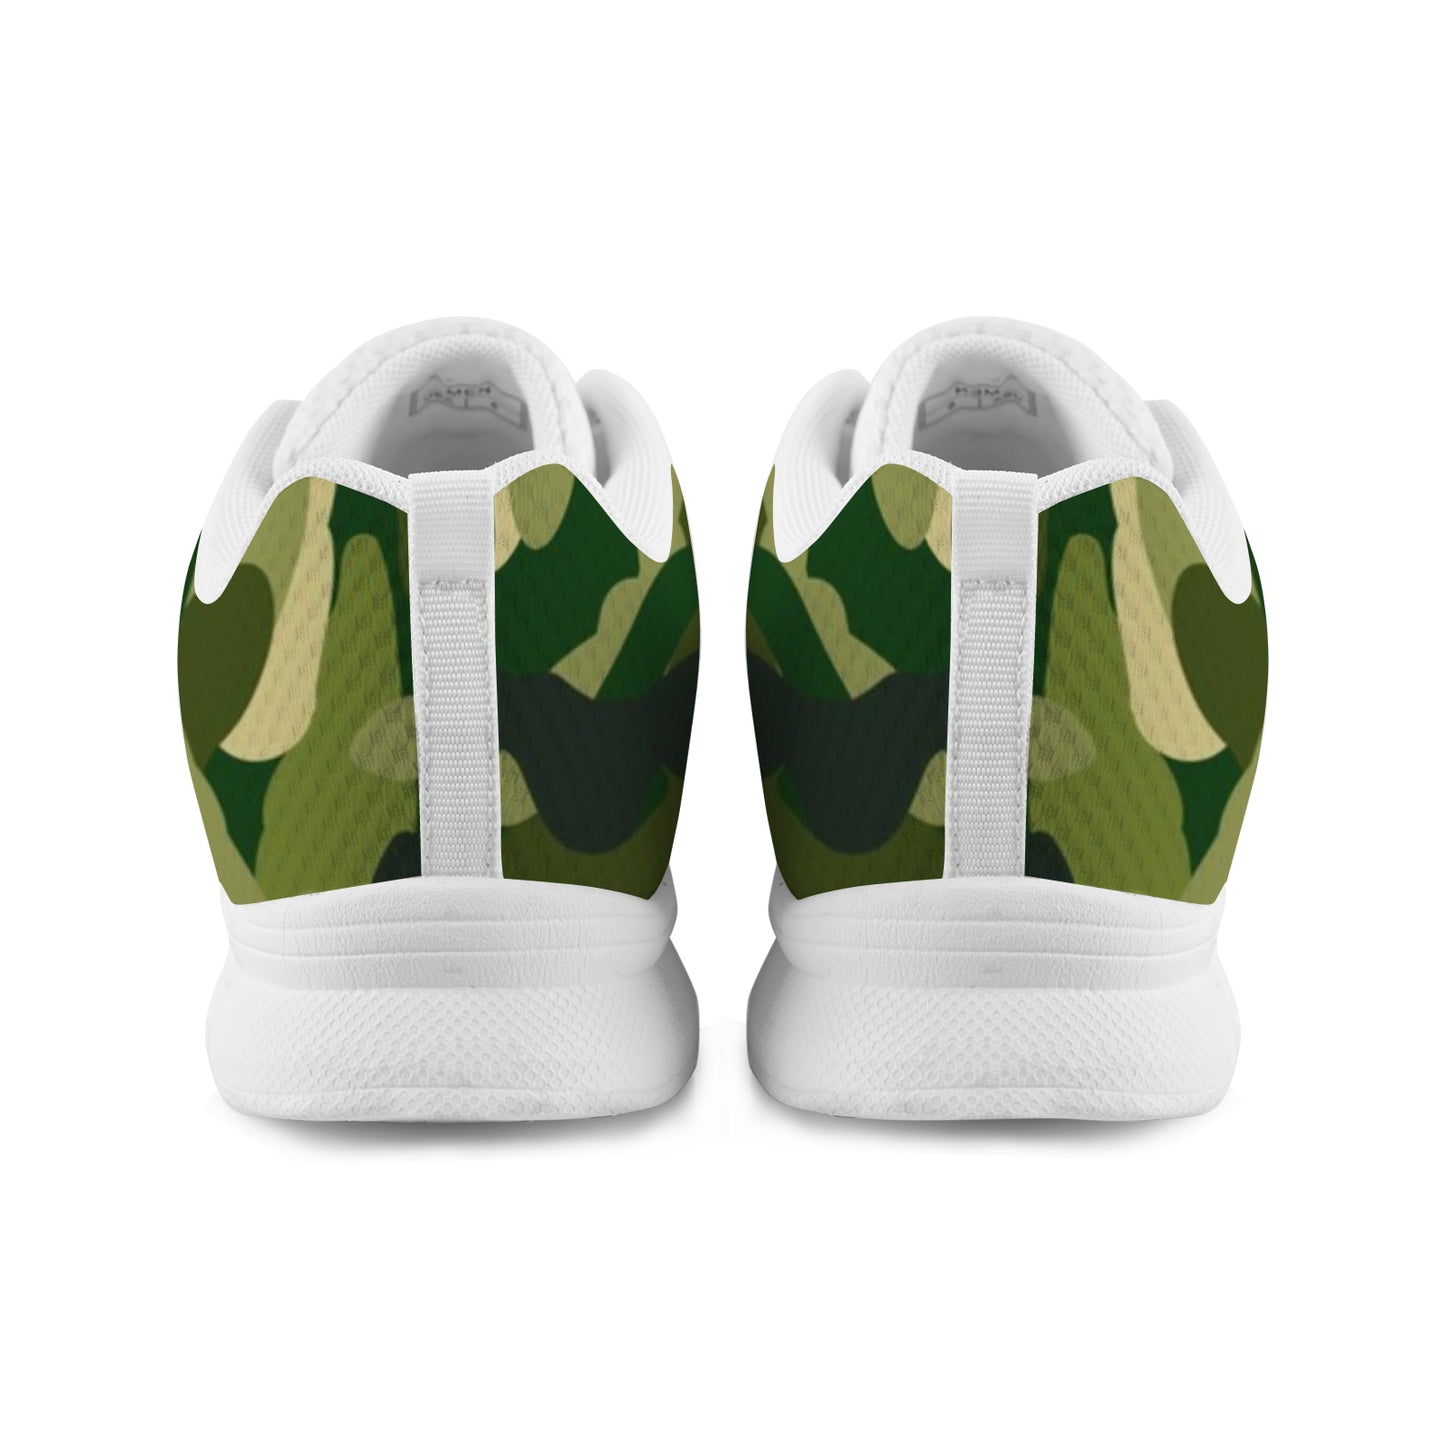 Men's Breathable Sneakers - Green Camoflauge